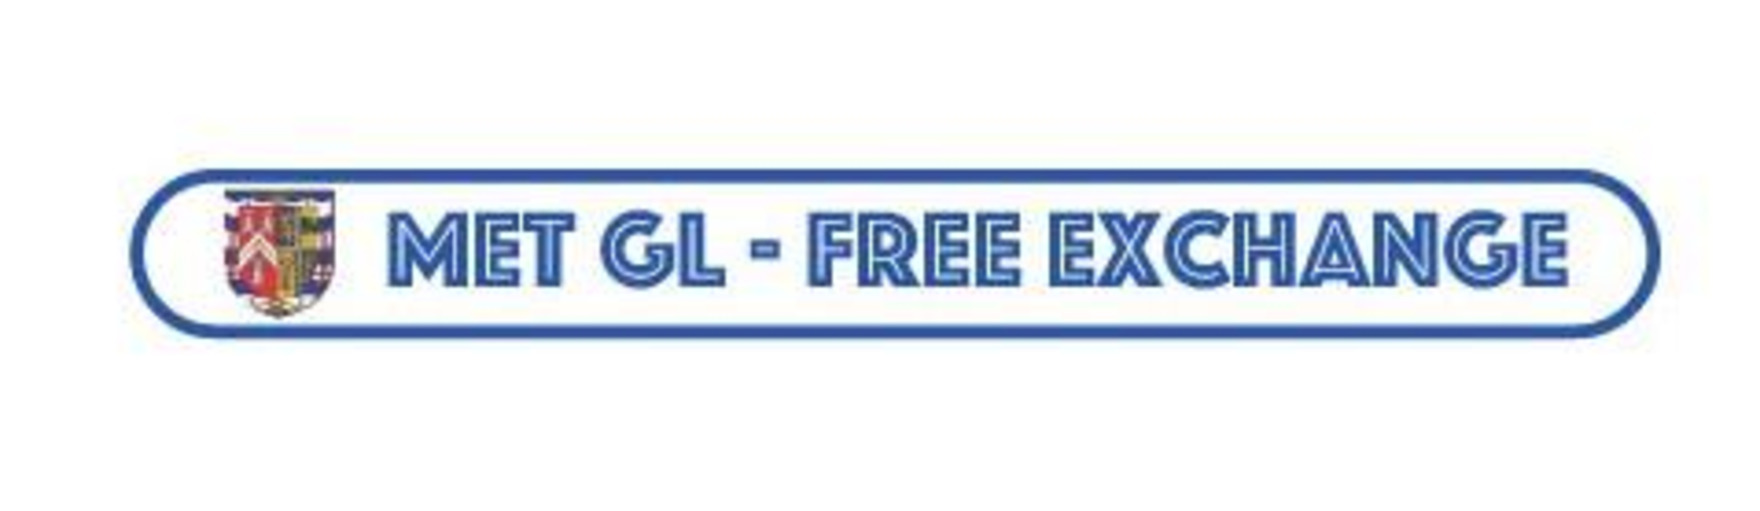 Met GL Free Exchange - COSMIC Charity